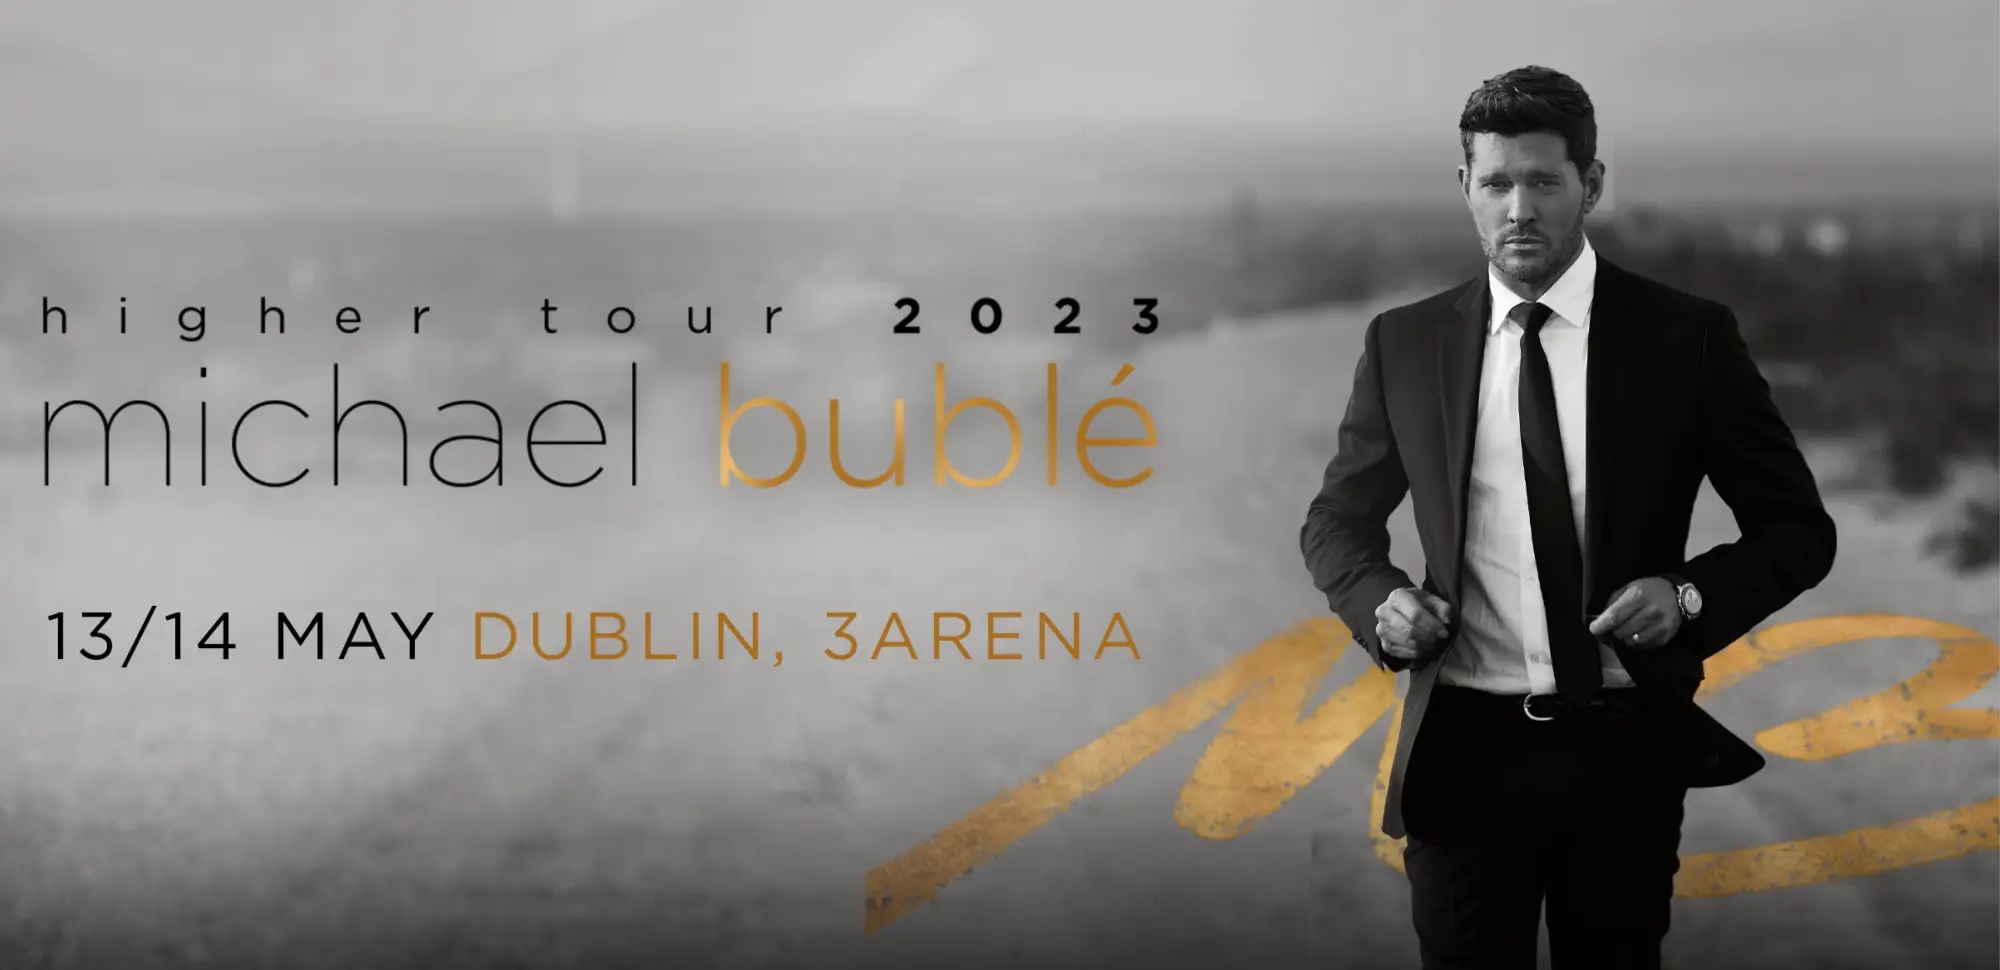 michael buble tour ireland